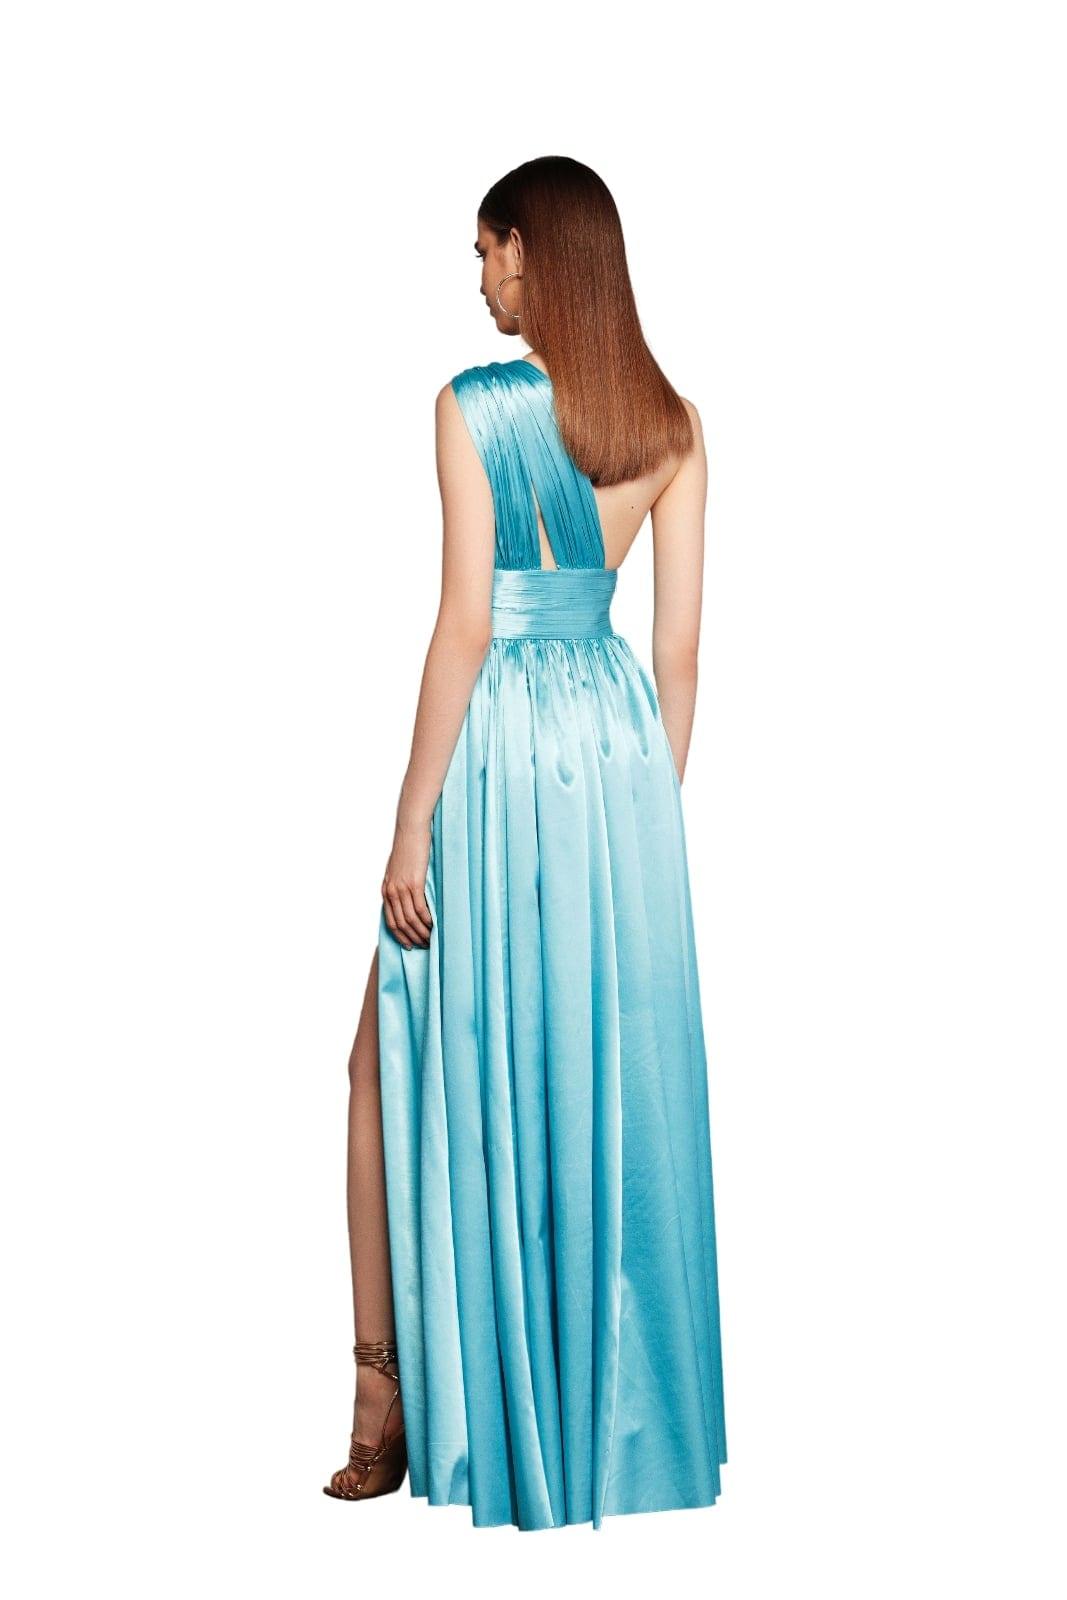 aphrodite-light-blue-gown-03